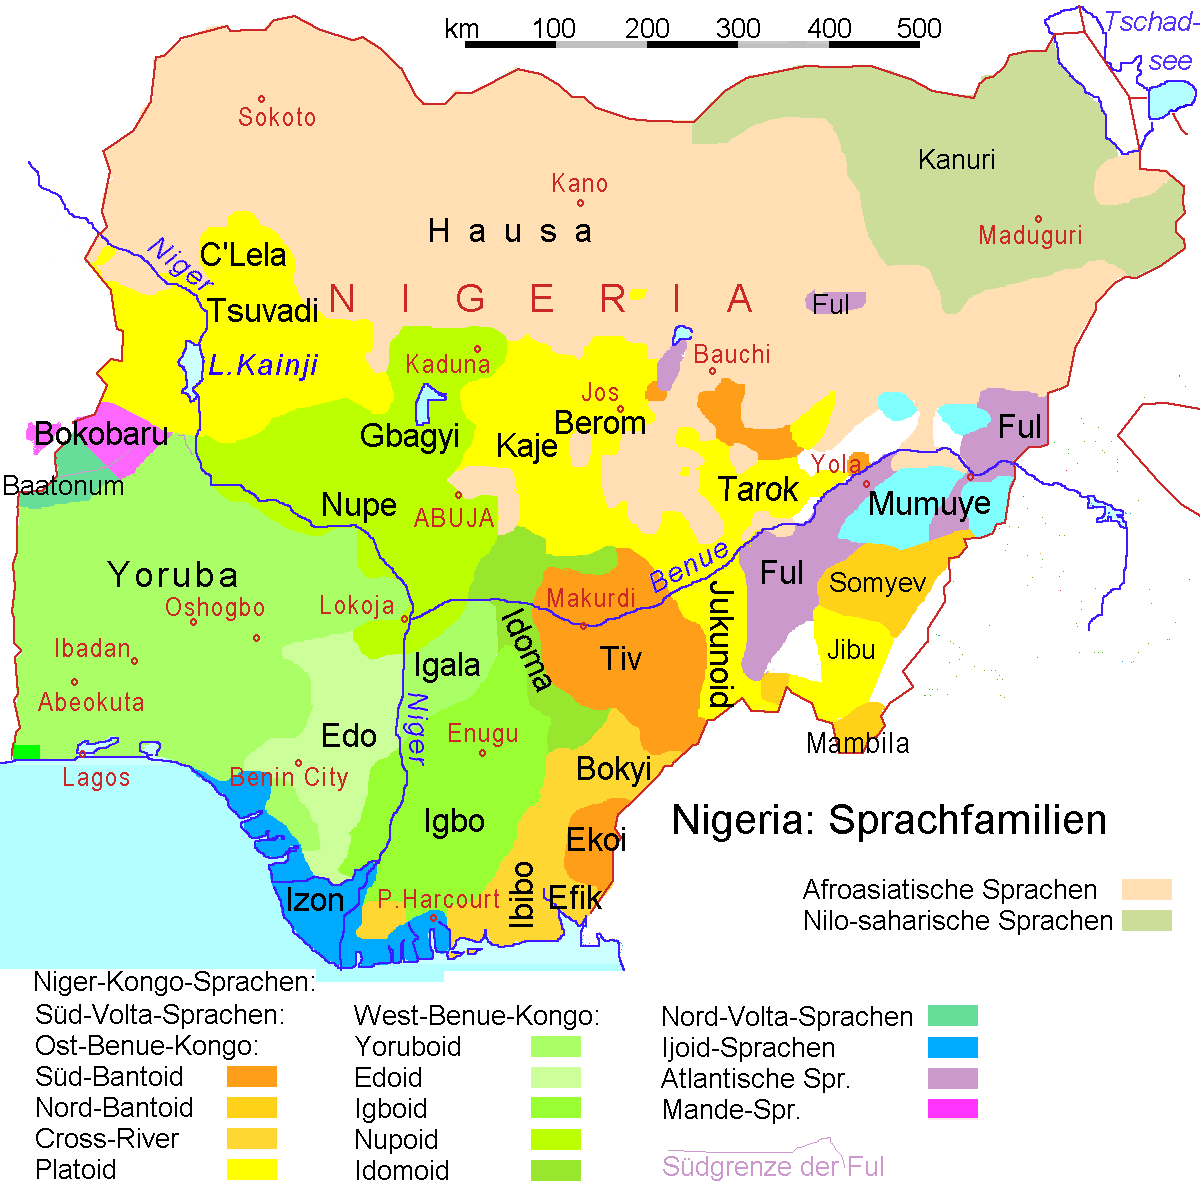 file-nigeria-sprachfamilien-png-wikimedia-commons